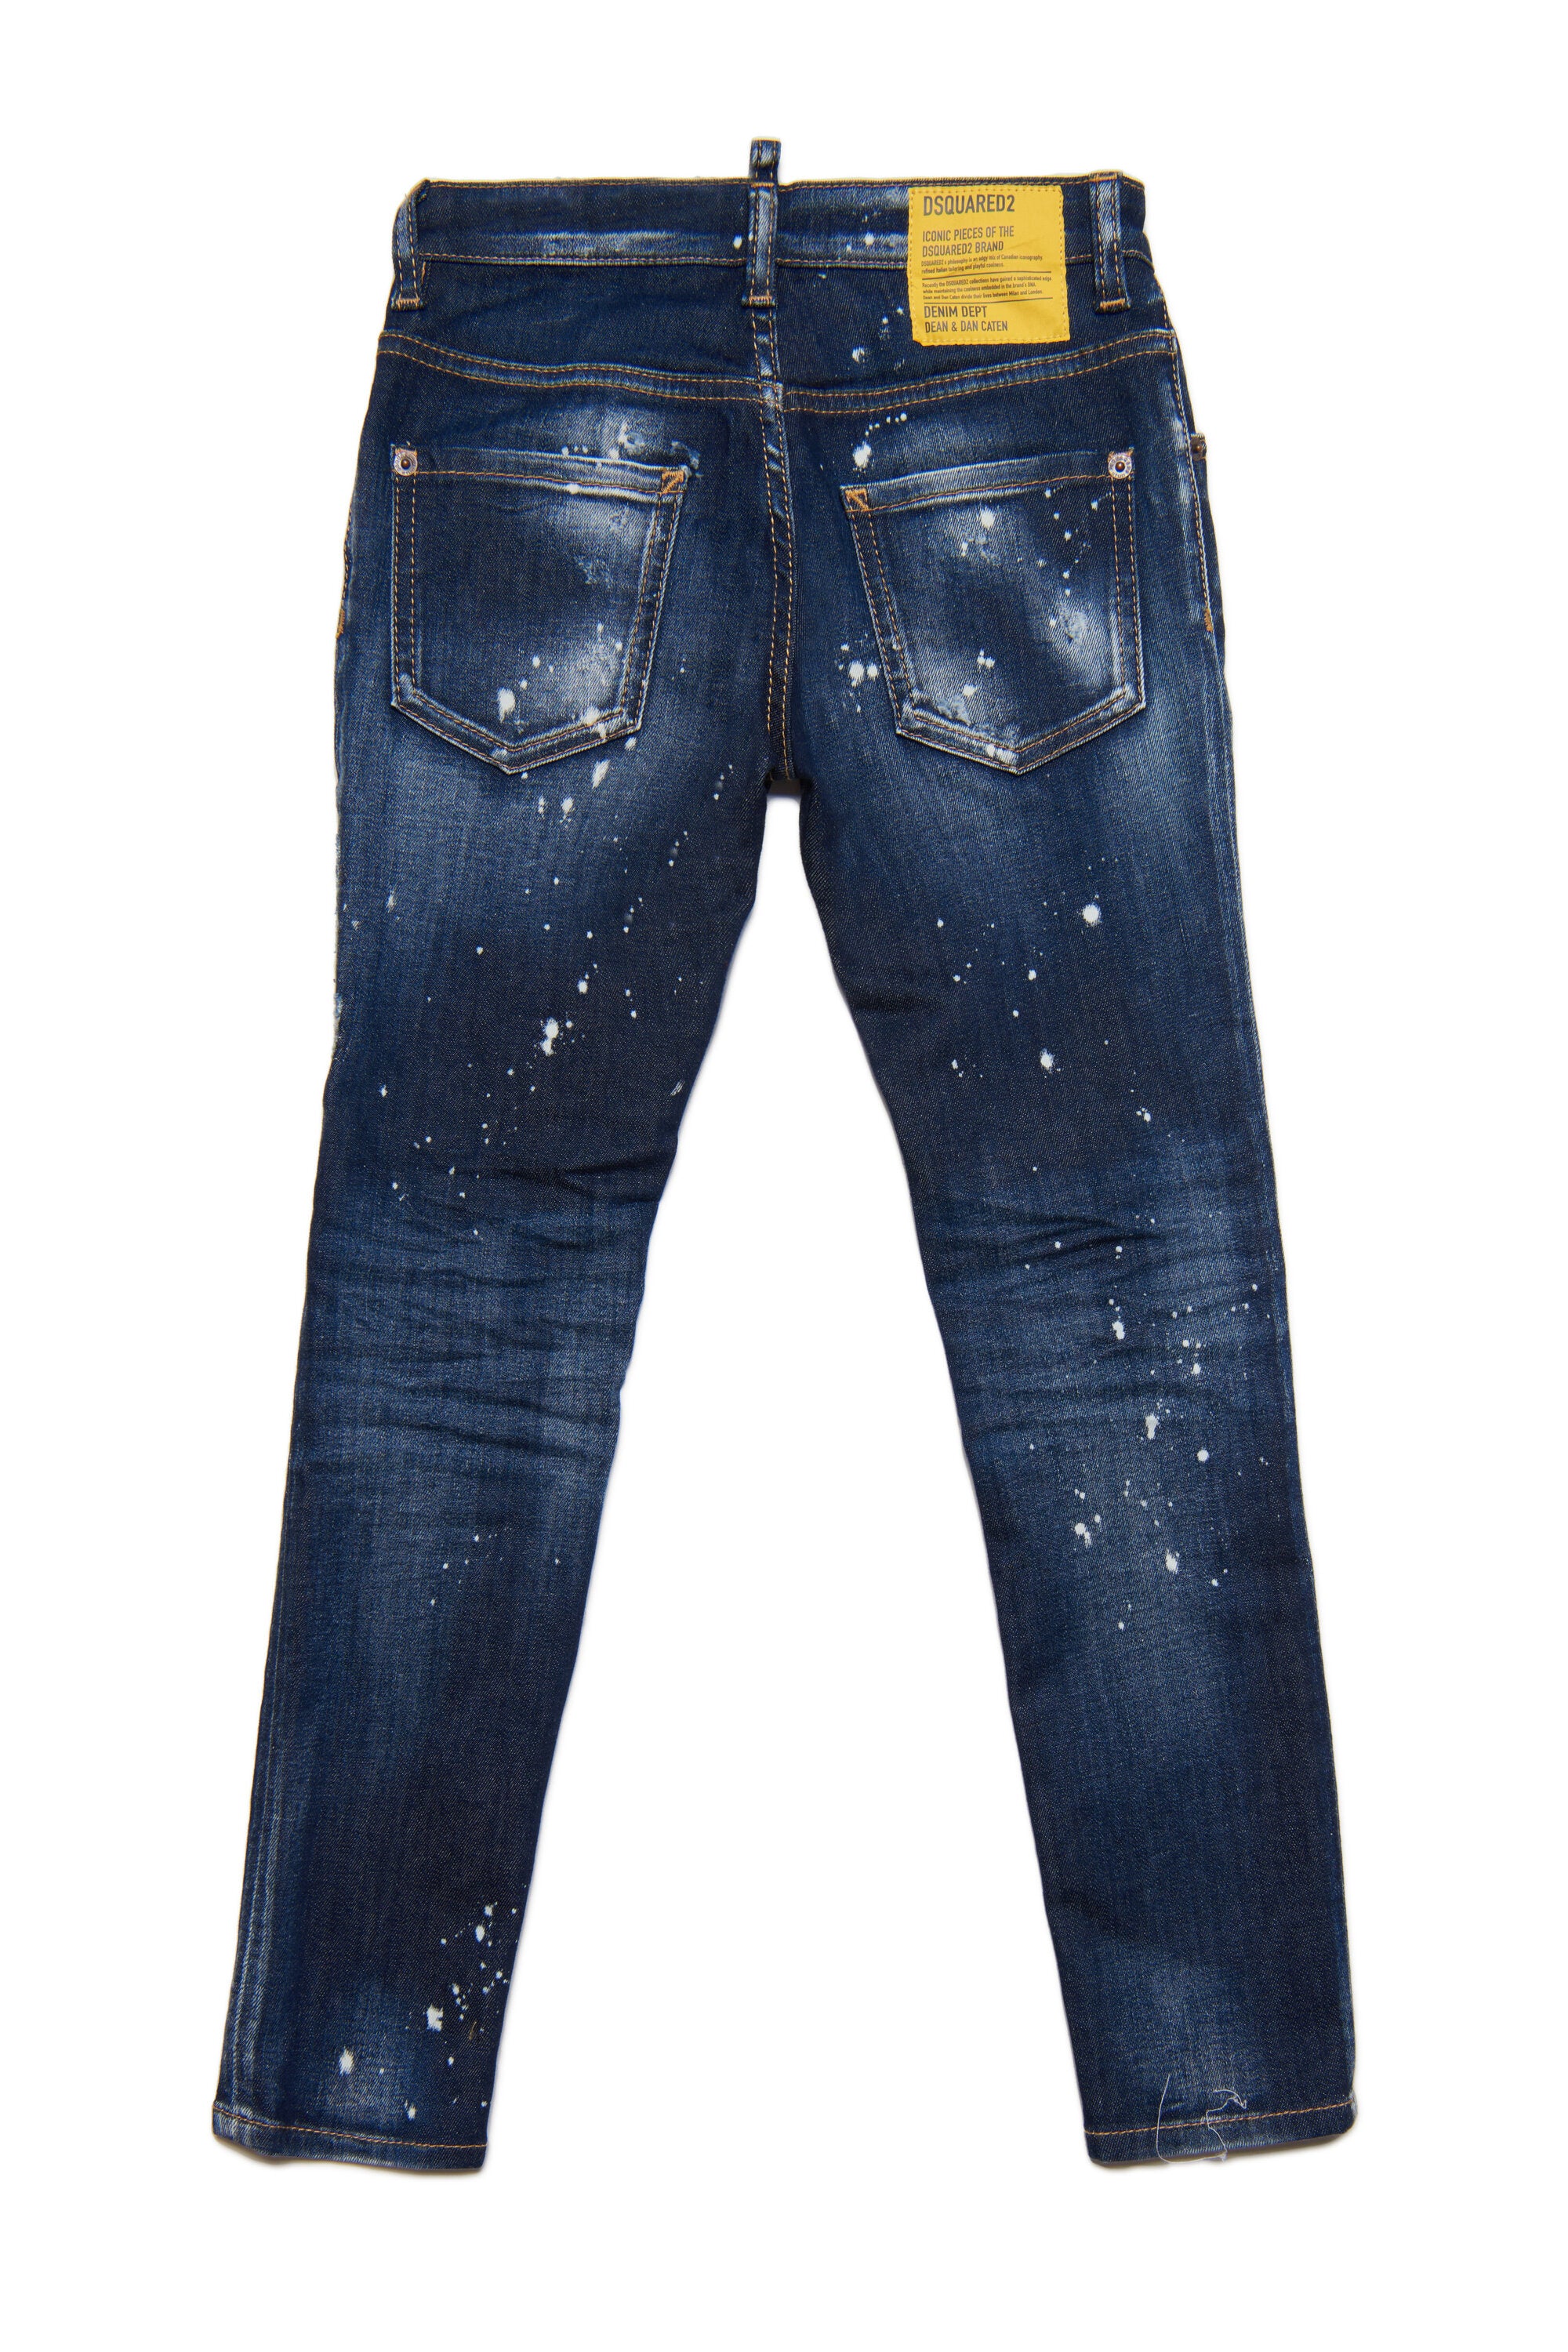 Dsquared2 Denim Slim Jeans for Men for sale | eBay